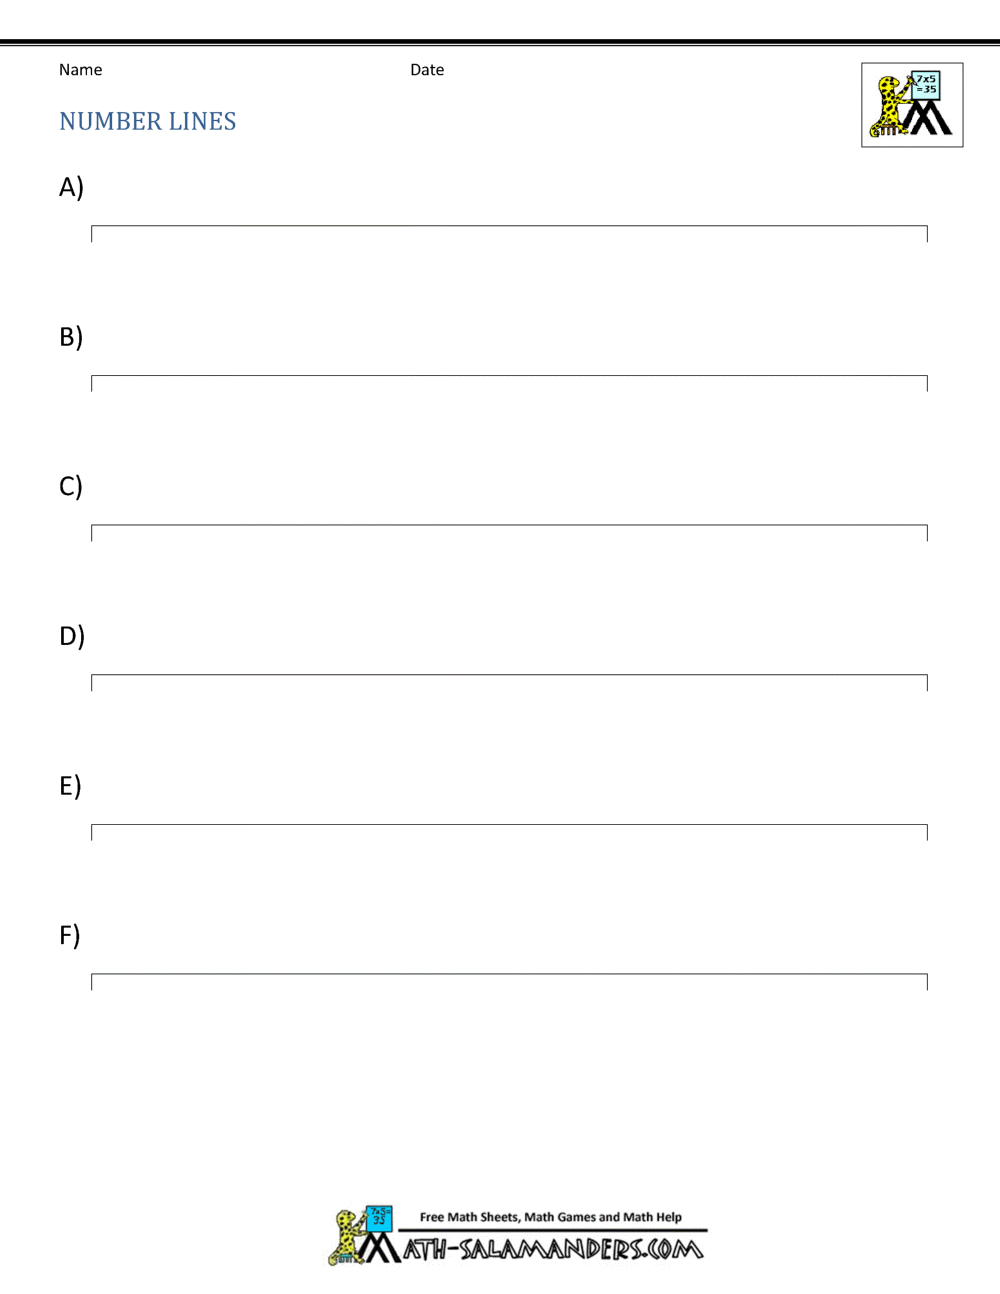 Blank Number Lines